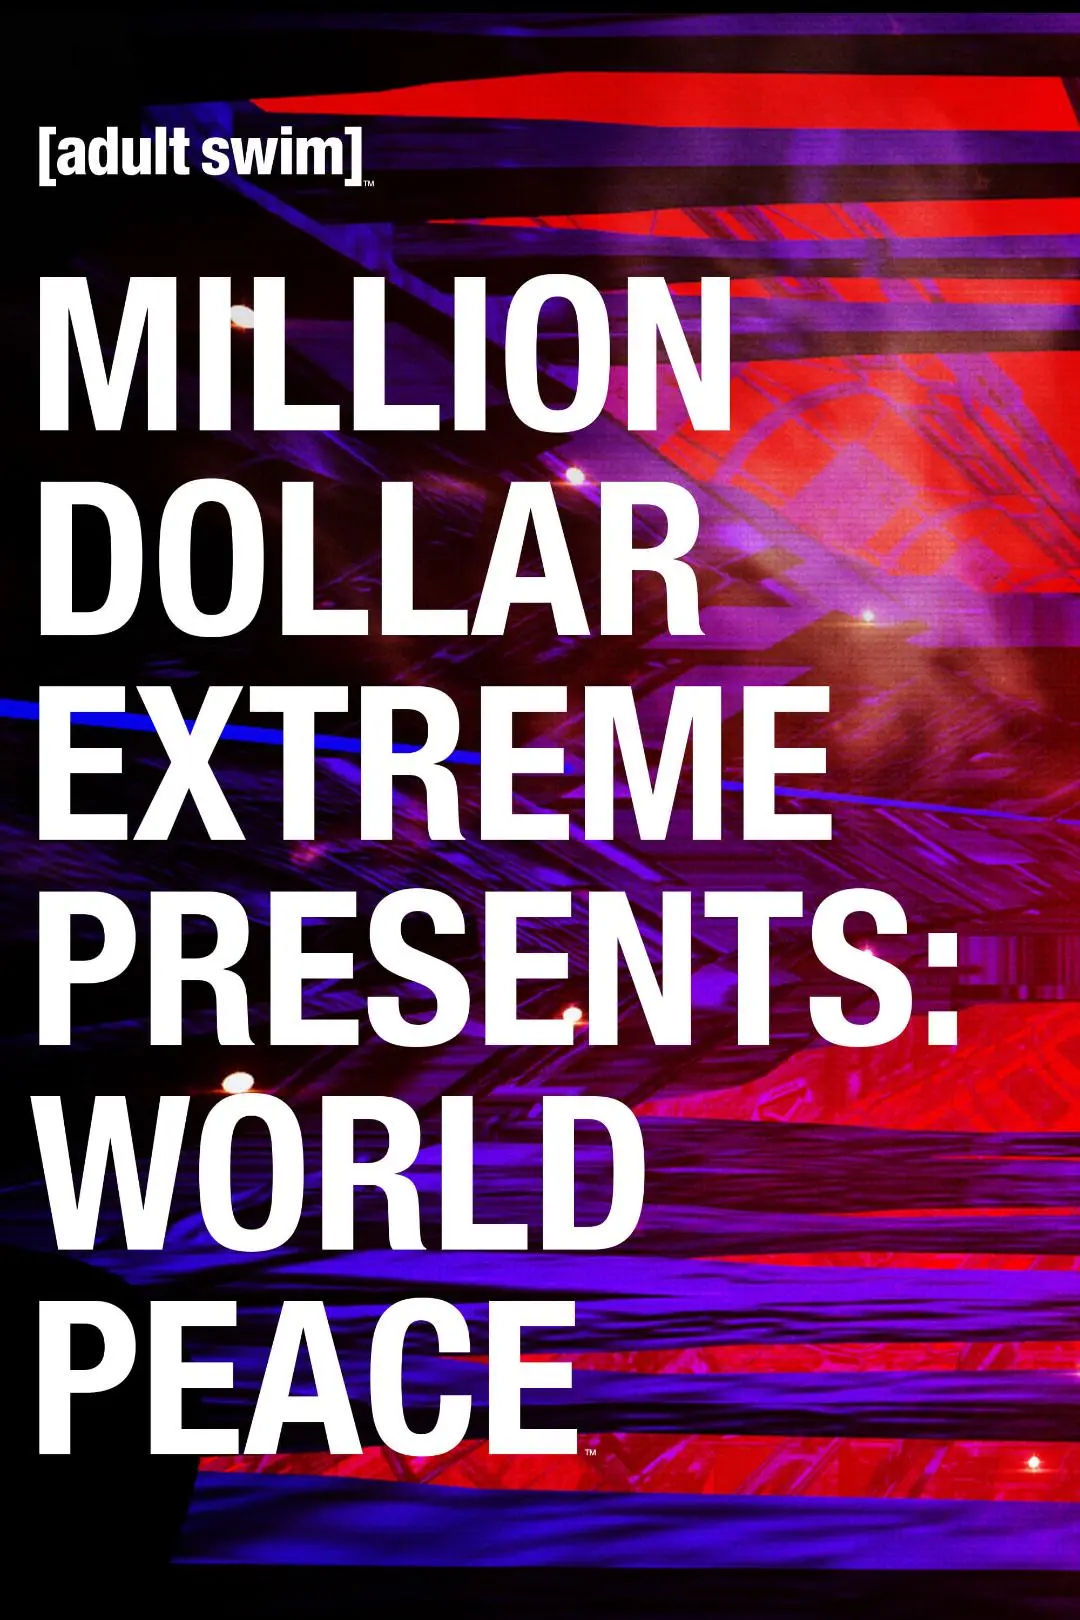 Million Dollar Extreme Presents: World Peace_peliplat